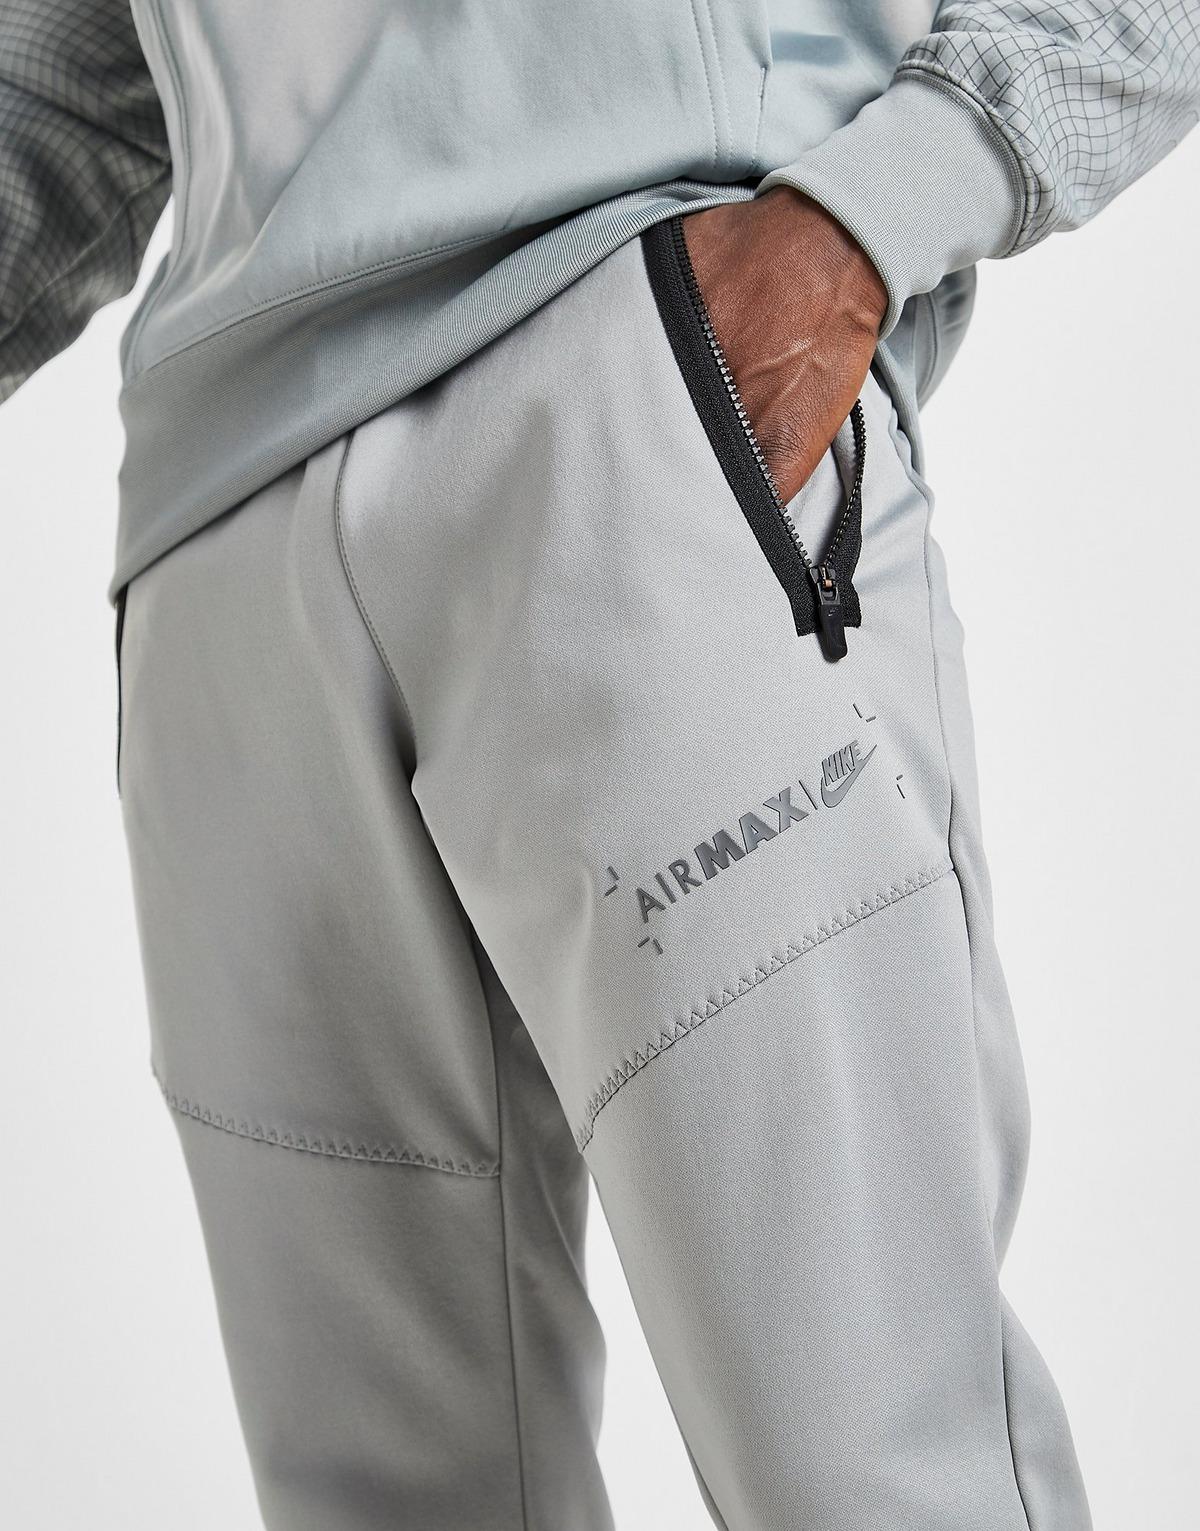 Nike Fleece Air Max Track Pants in Grey (Gray) for Men - Lyst